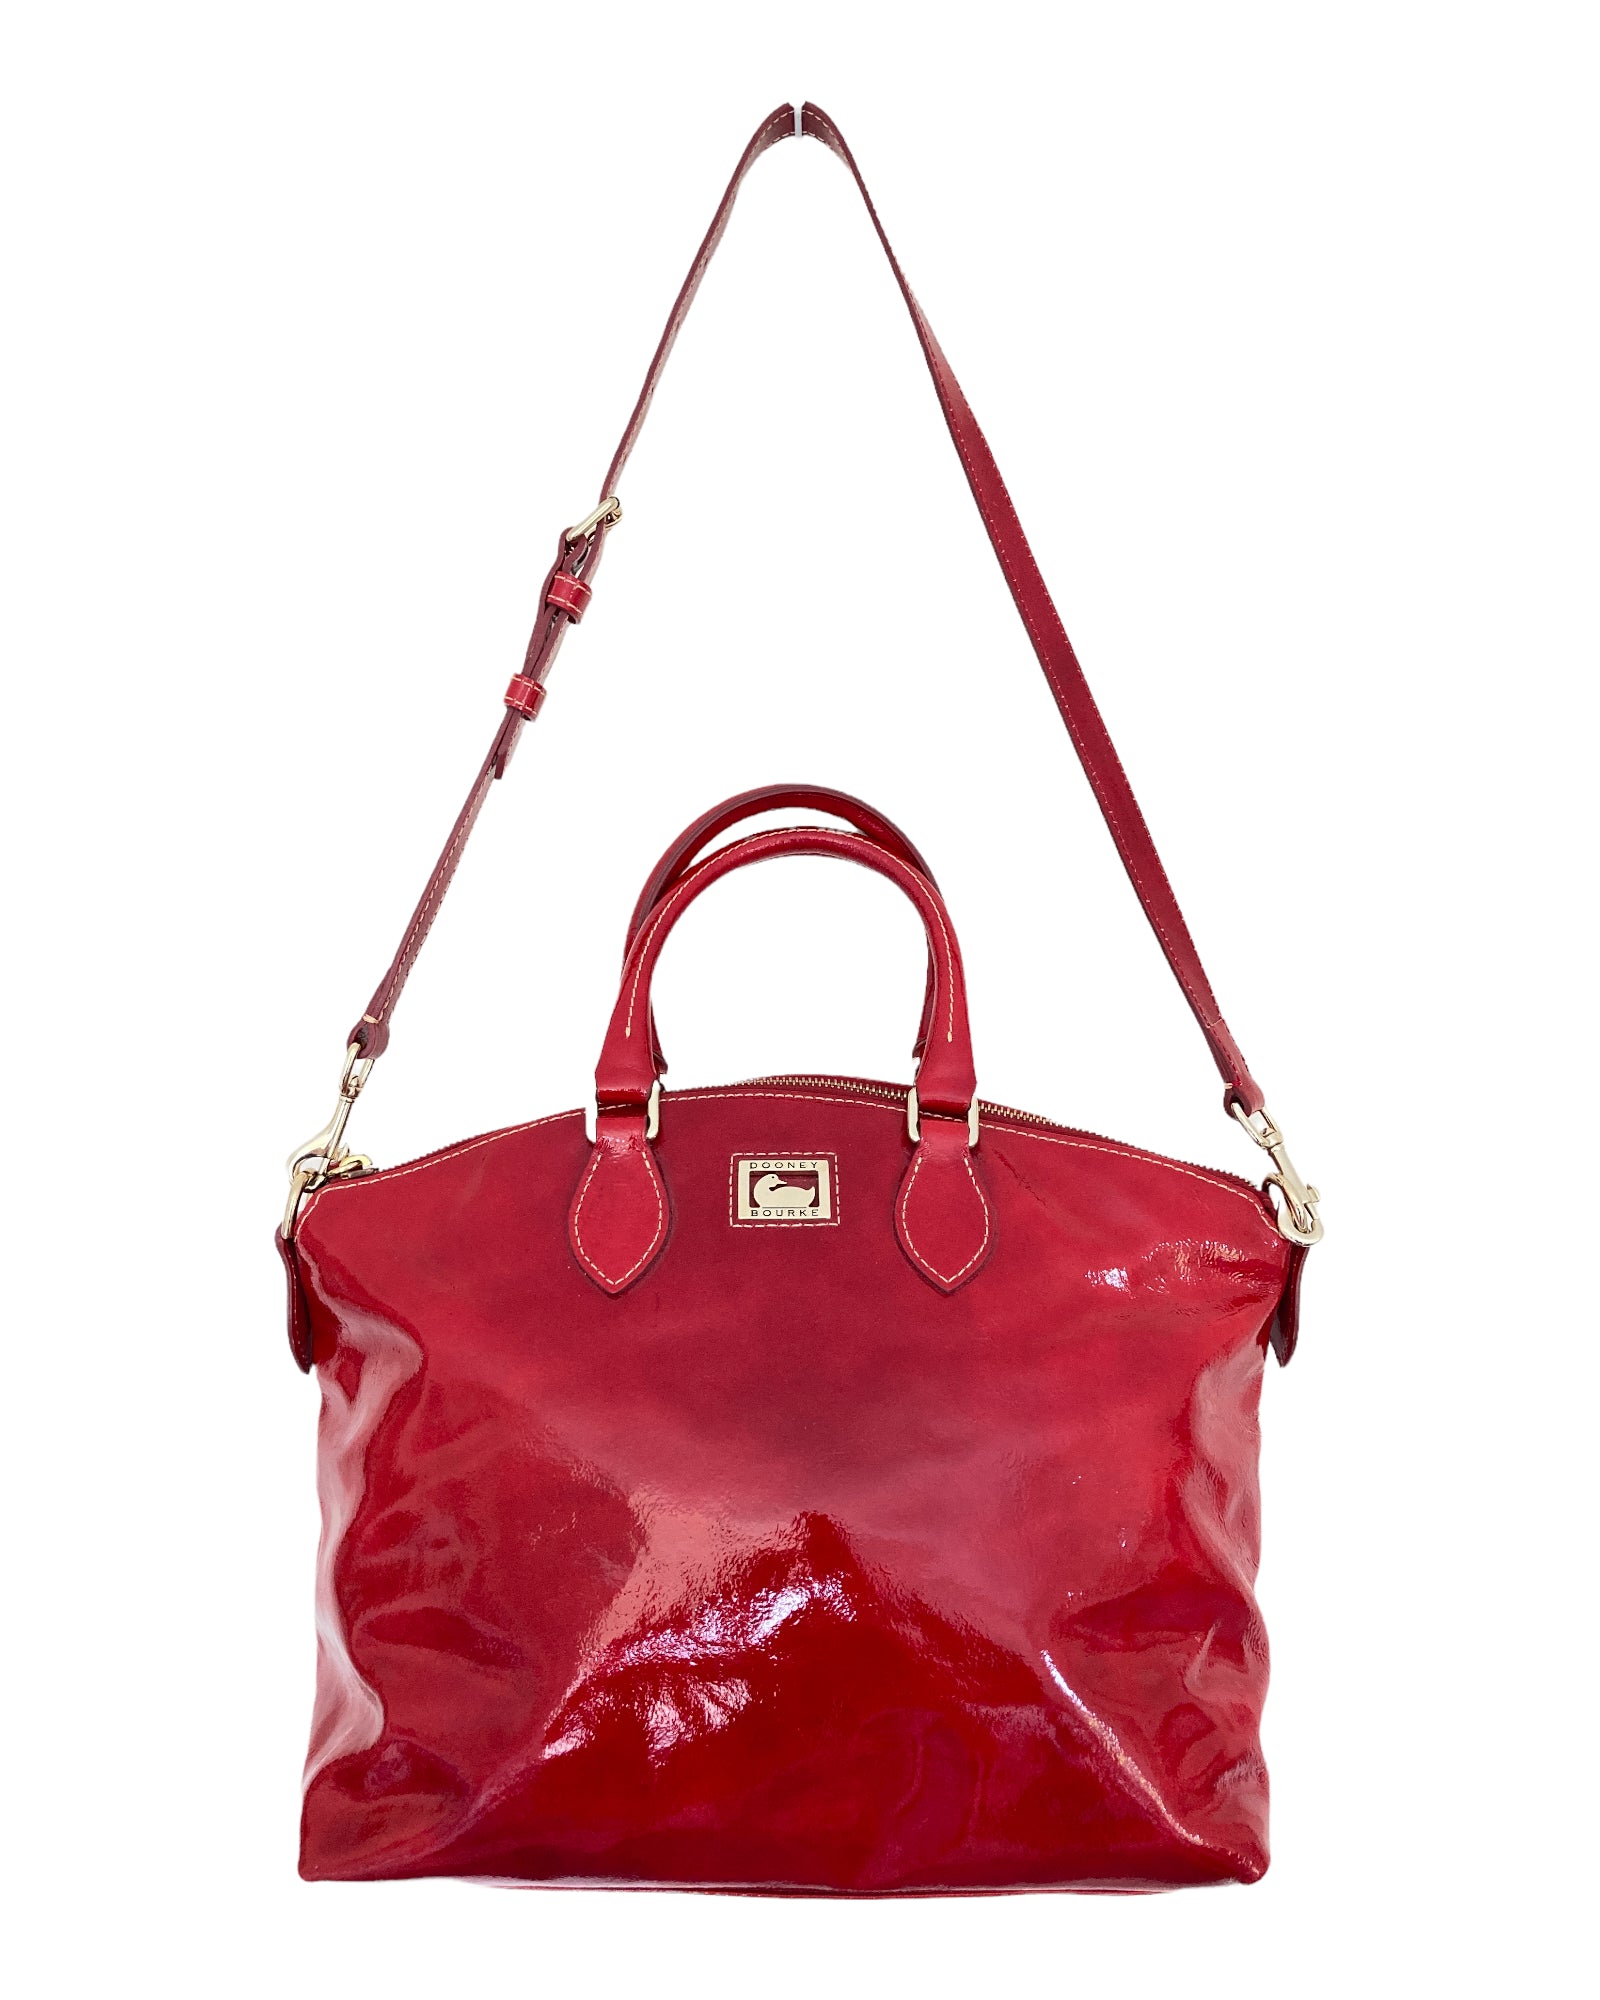 Dooney & Bourke Red Patent Leather Satchel Bag